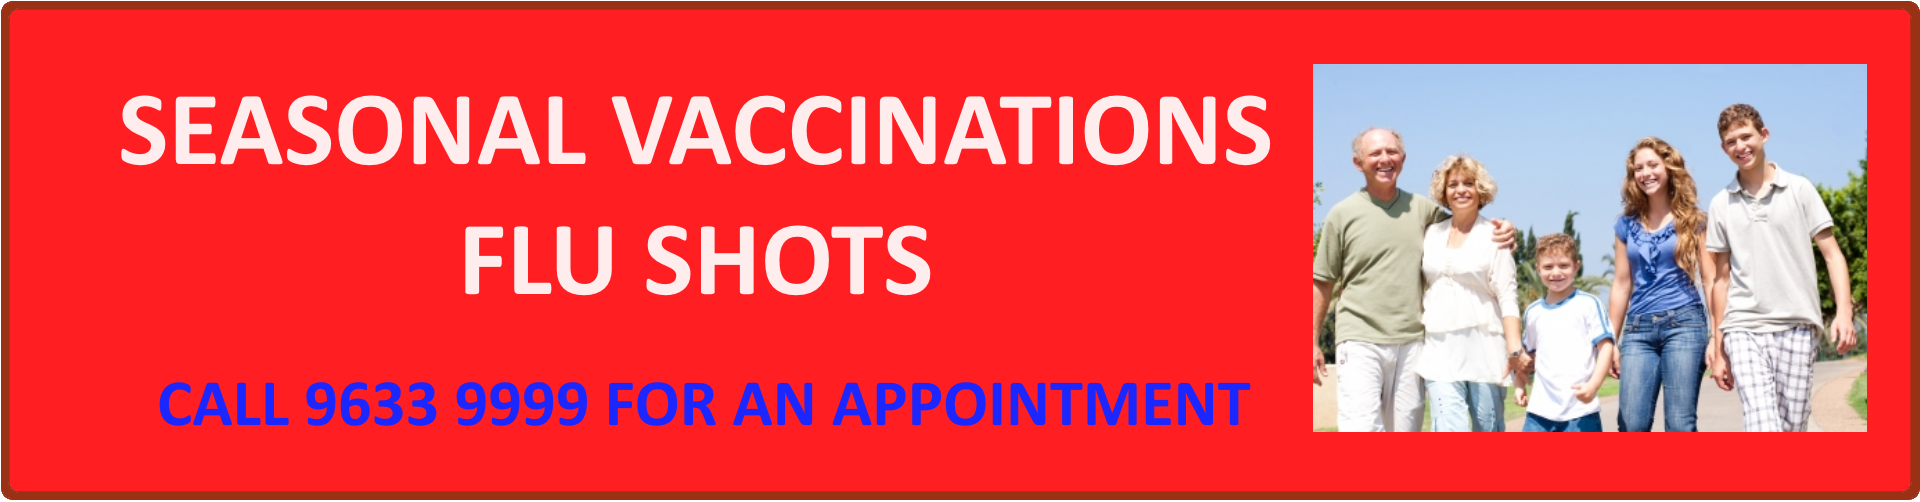 banner-vaccines-1920x502